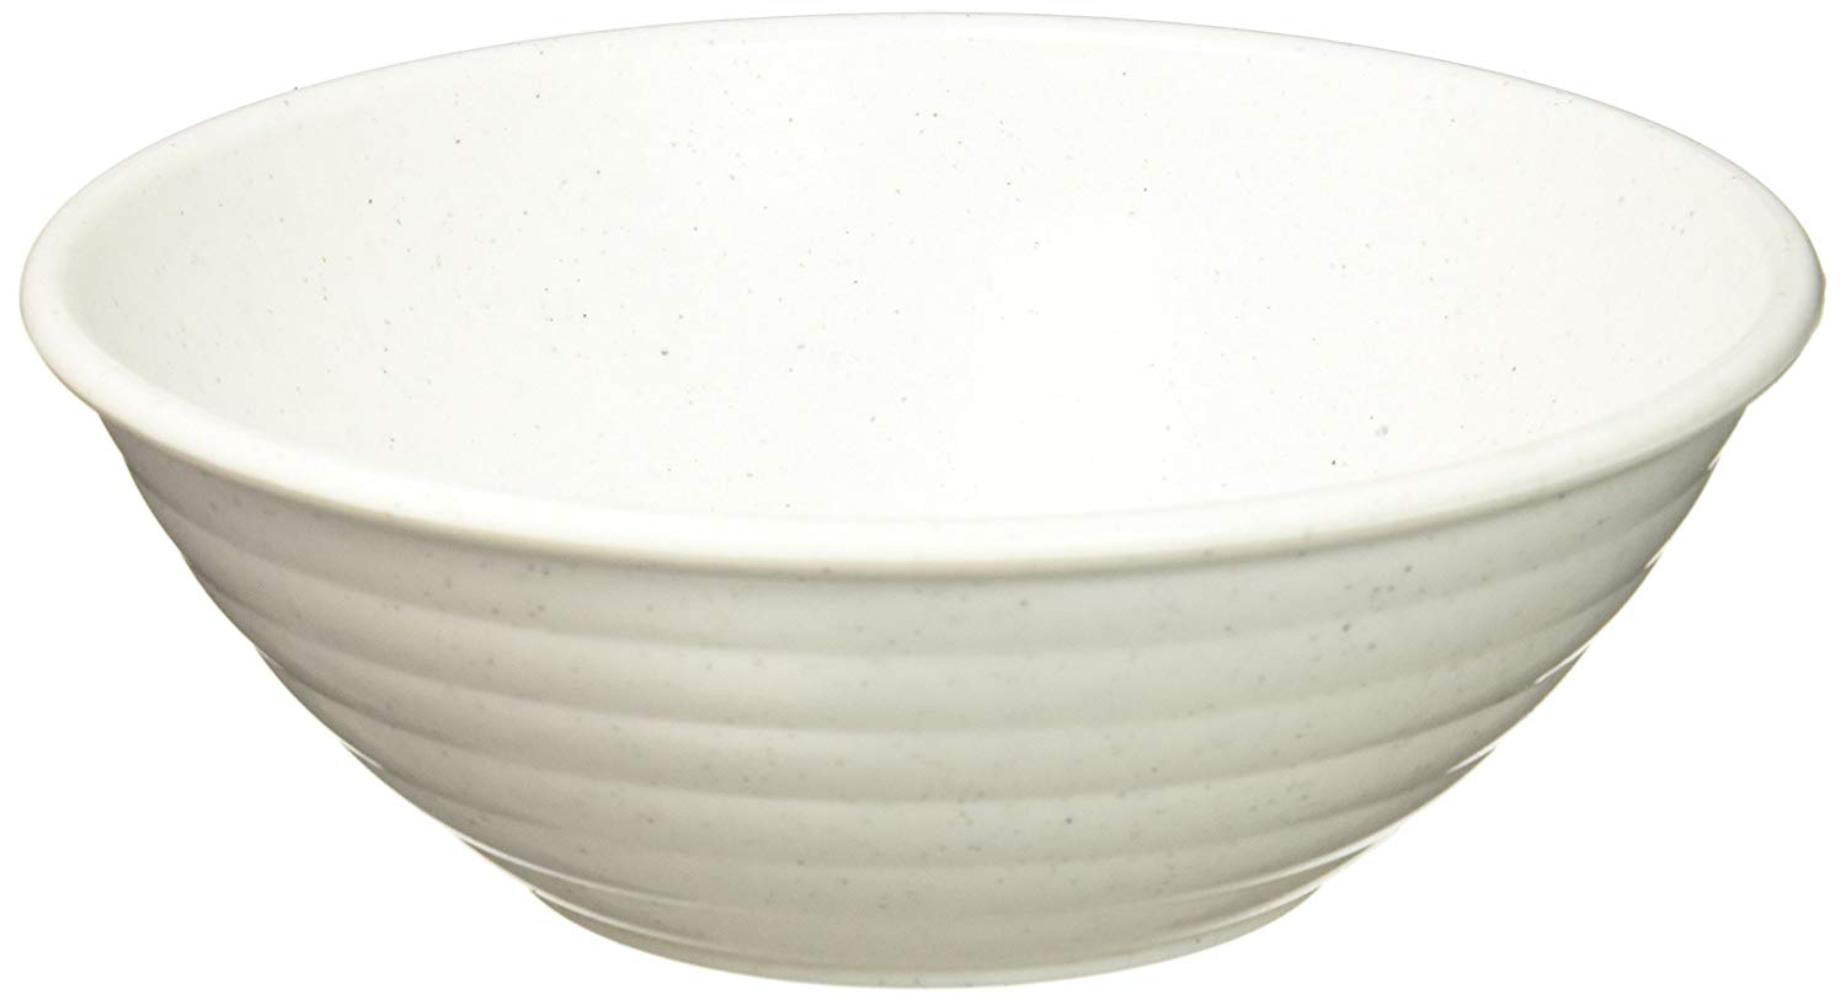 Microwave Safe 6" Bowl - Set of 2, BPA-free and Melamine-free Plastic